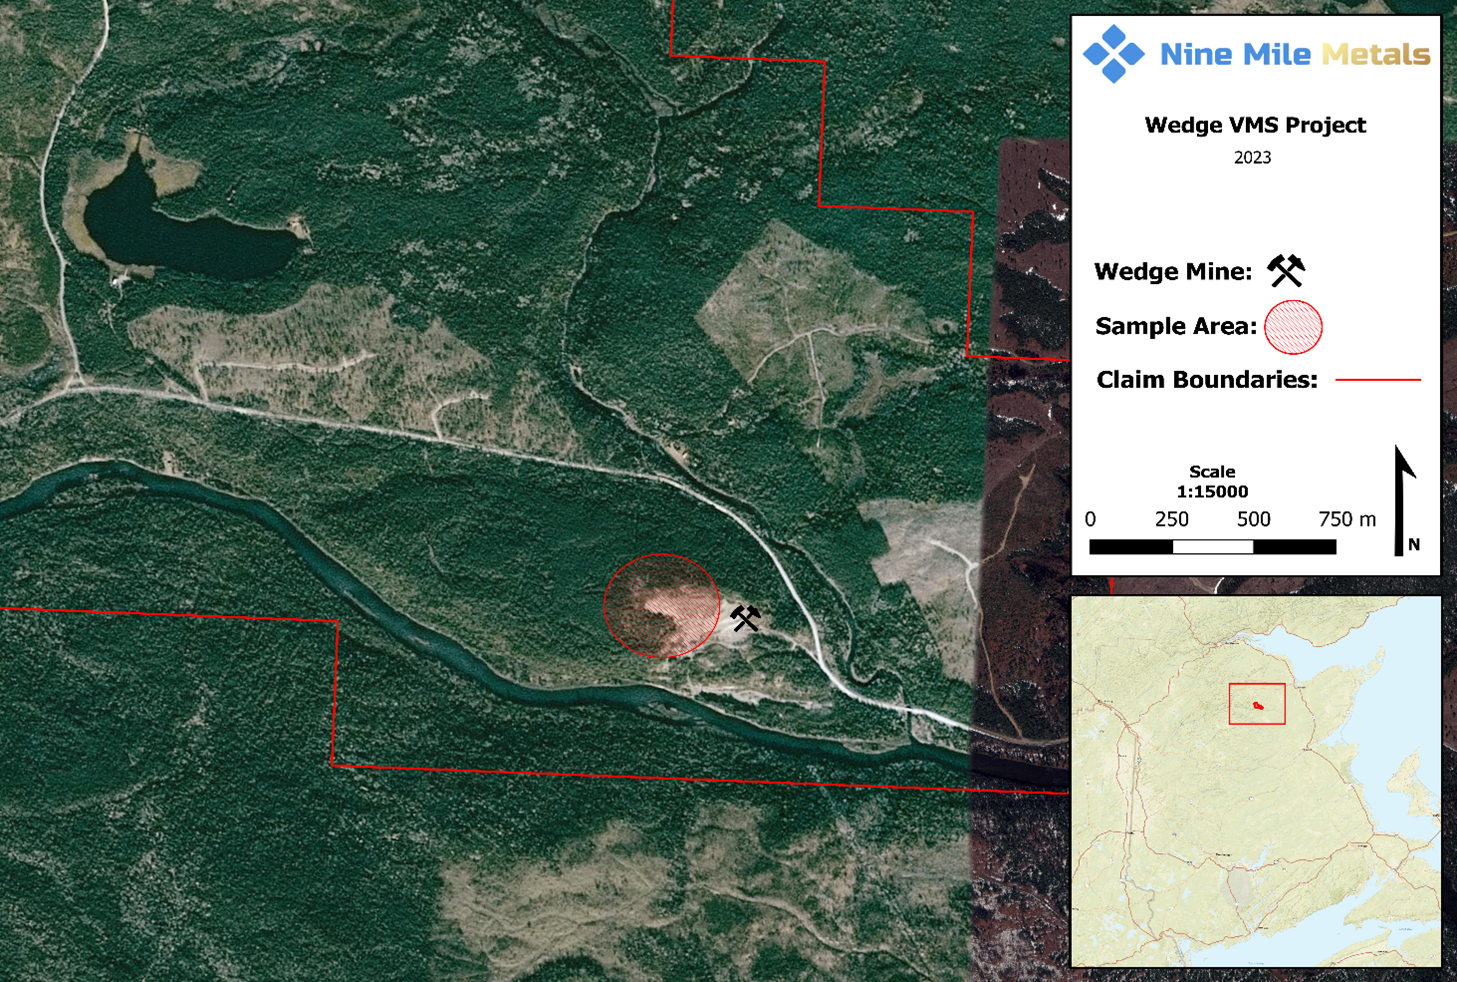 Historic Wedge Mine Site, Sample Locations